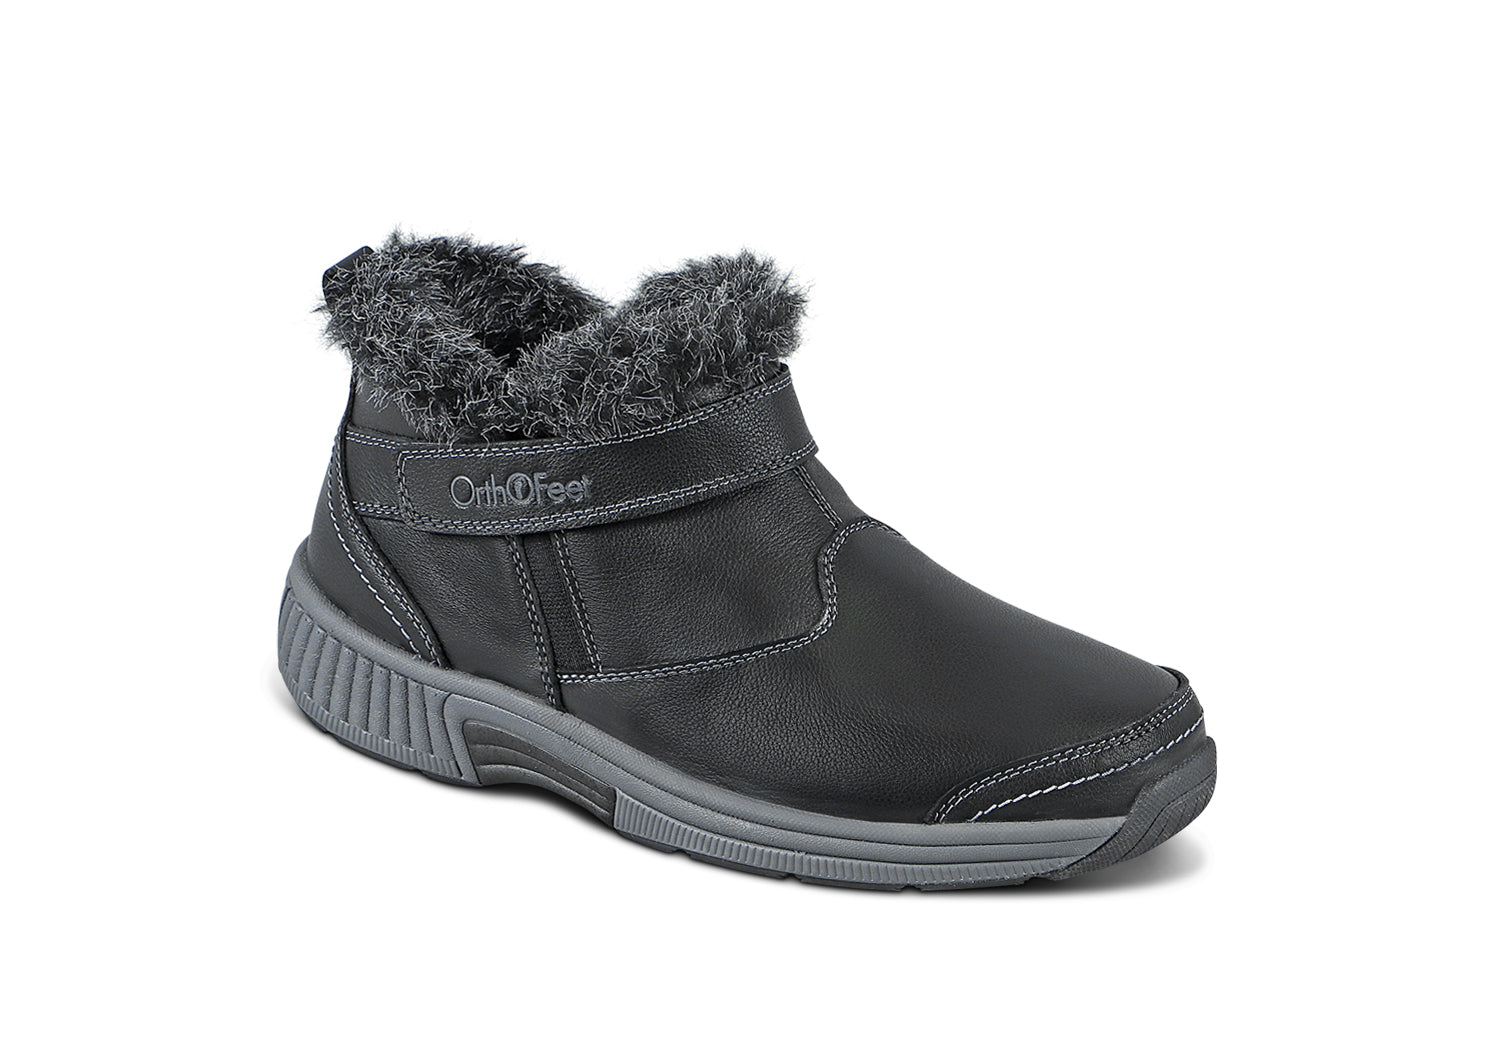 Sweden, Black | 12'' Women's Winter Boots | Removable felt